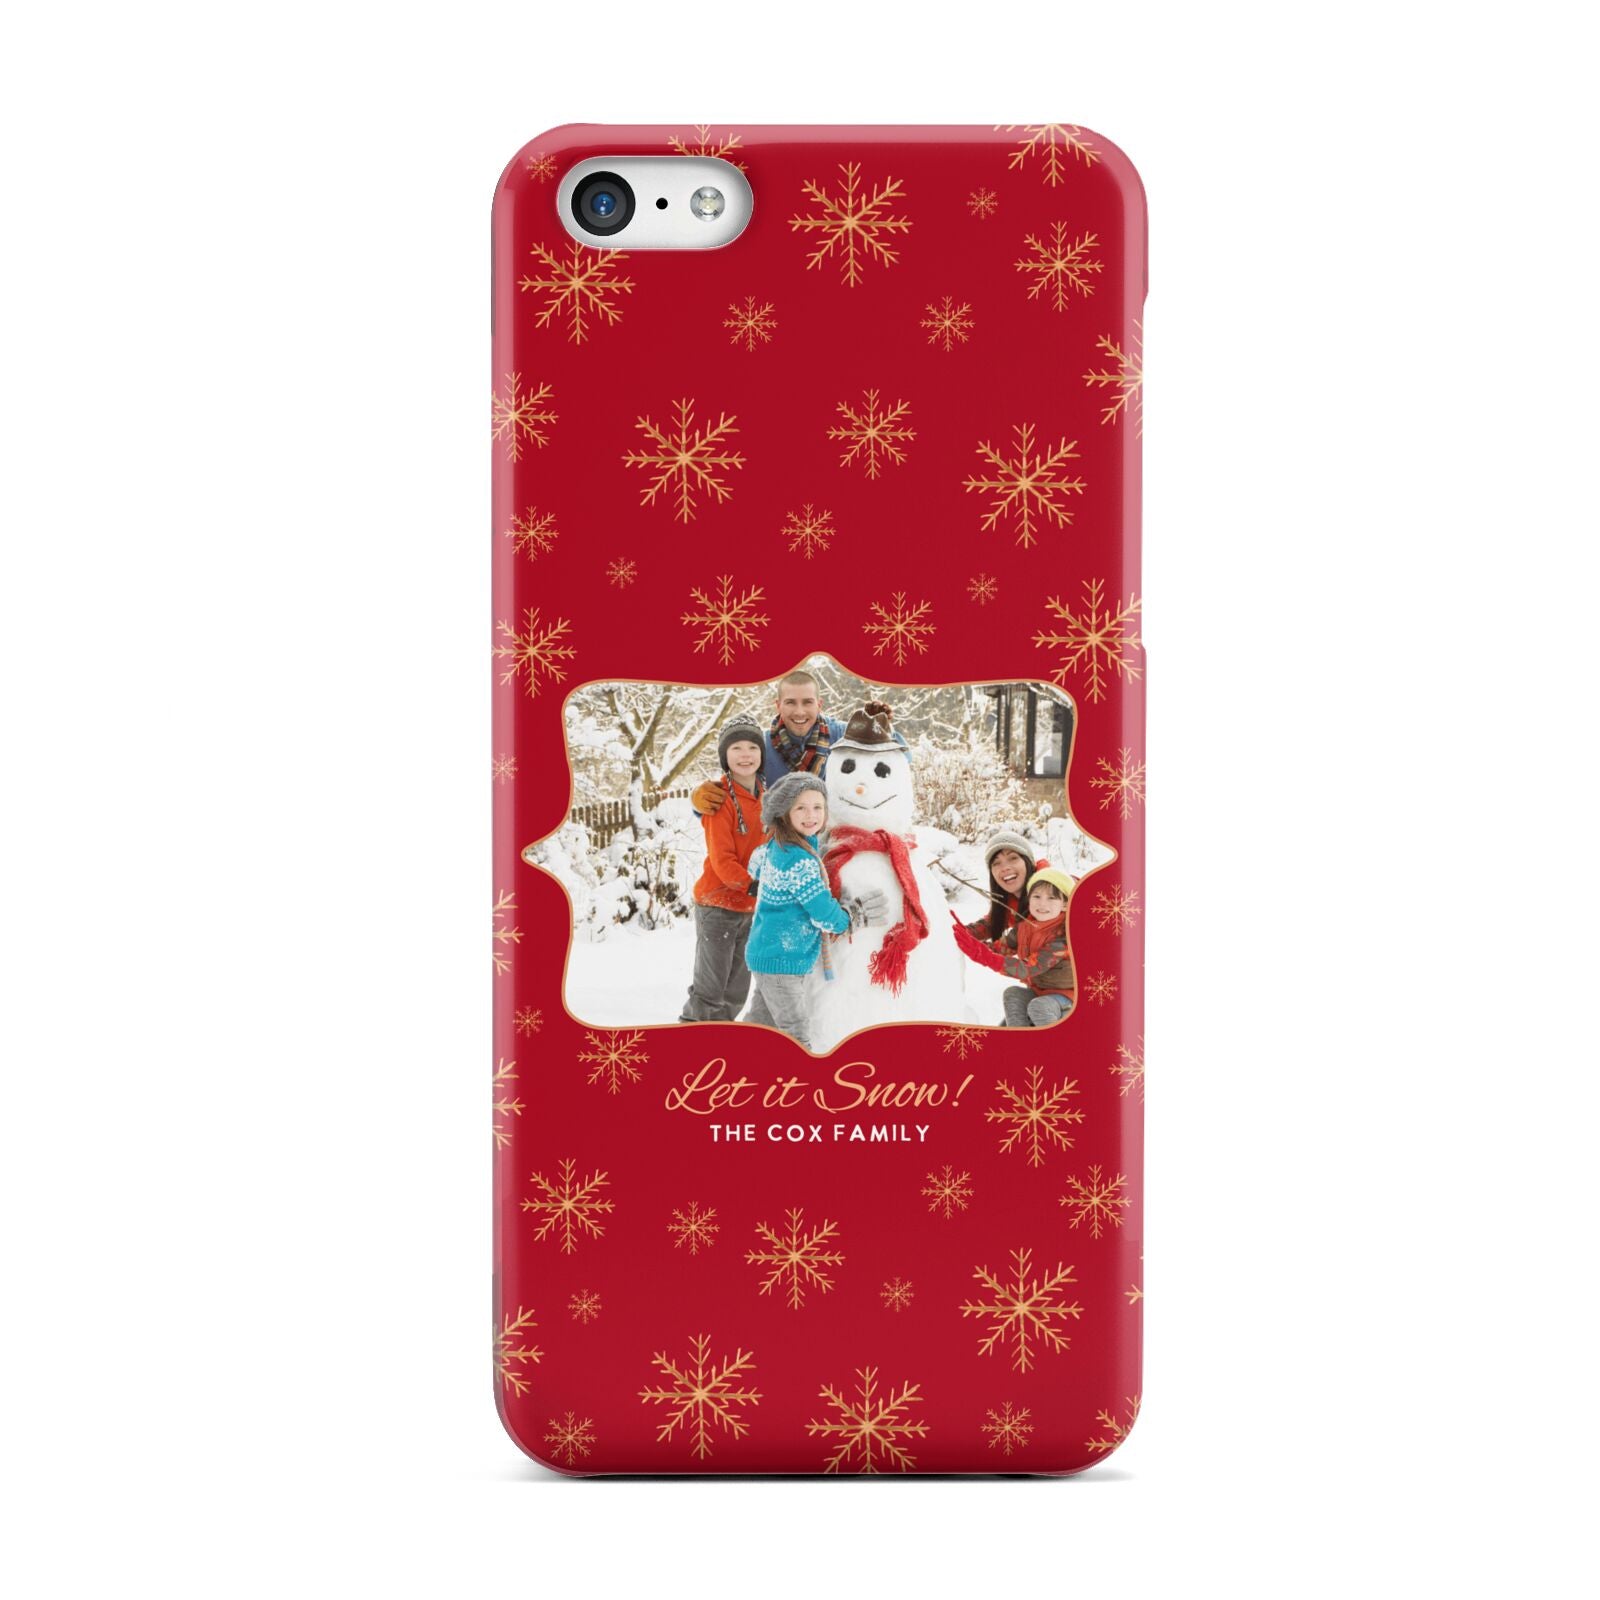 Let it Snow Christmas Photo Upload Apple iPhone 5c Case